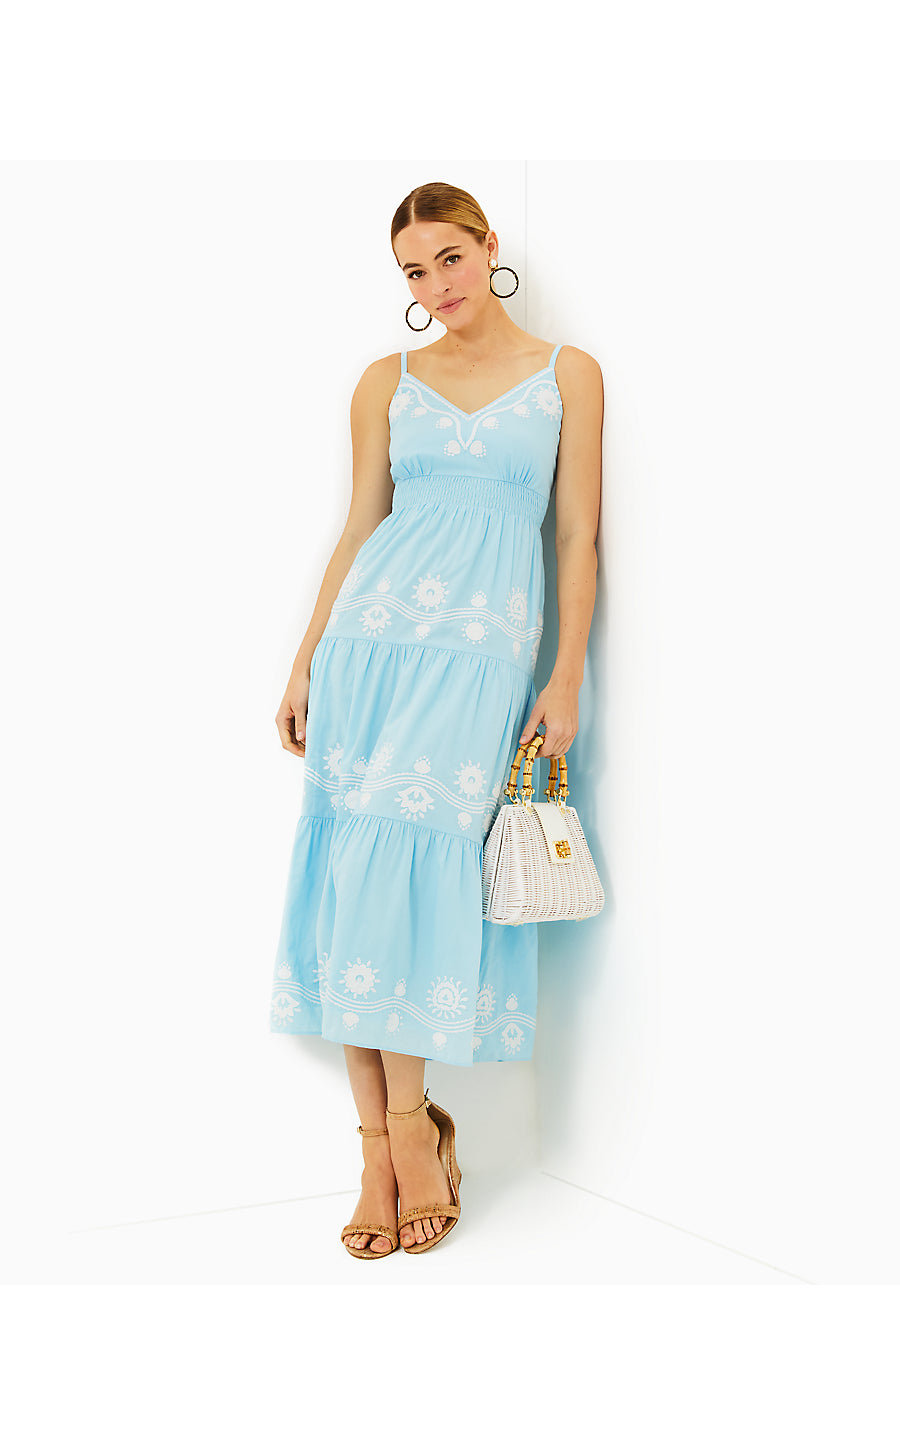 Aviry Embroidered Cotton Dress | Hydra Blue